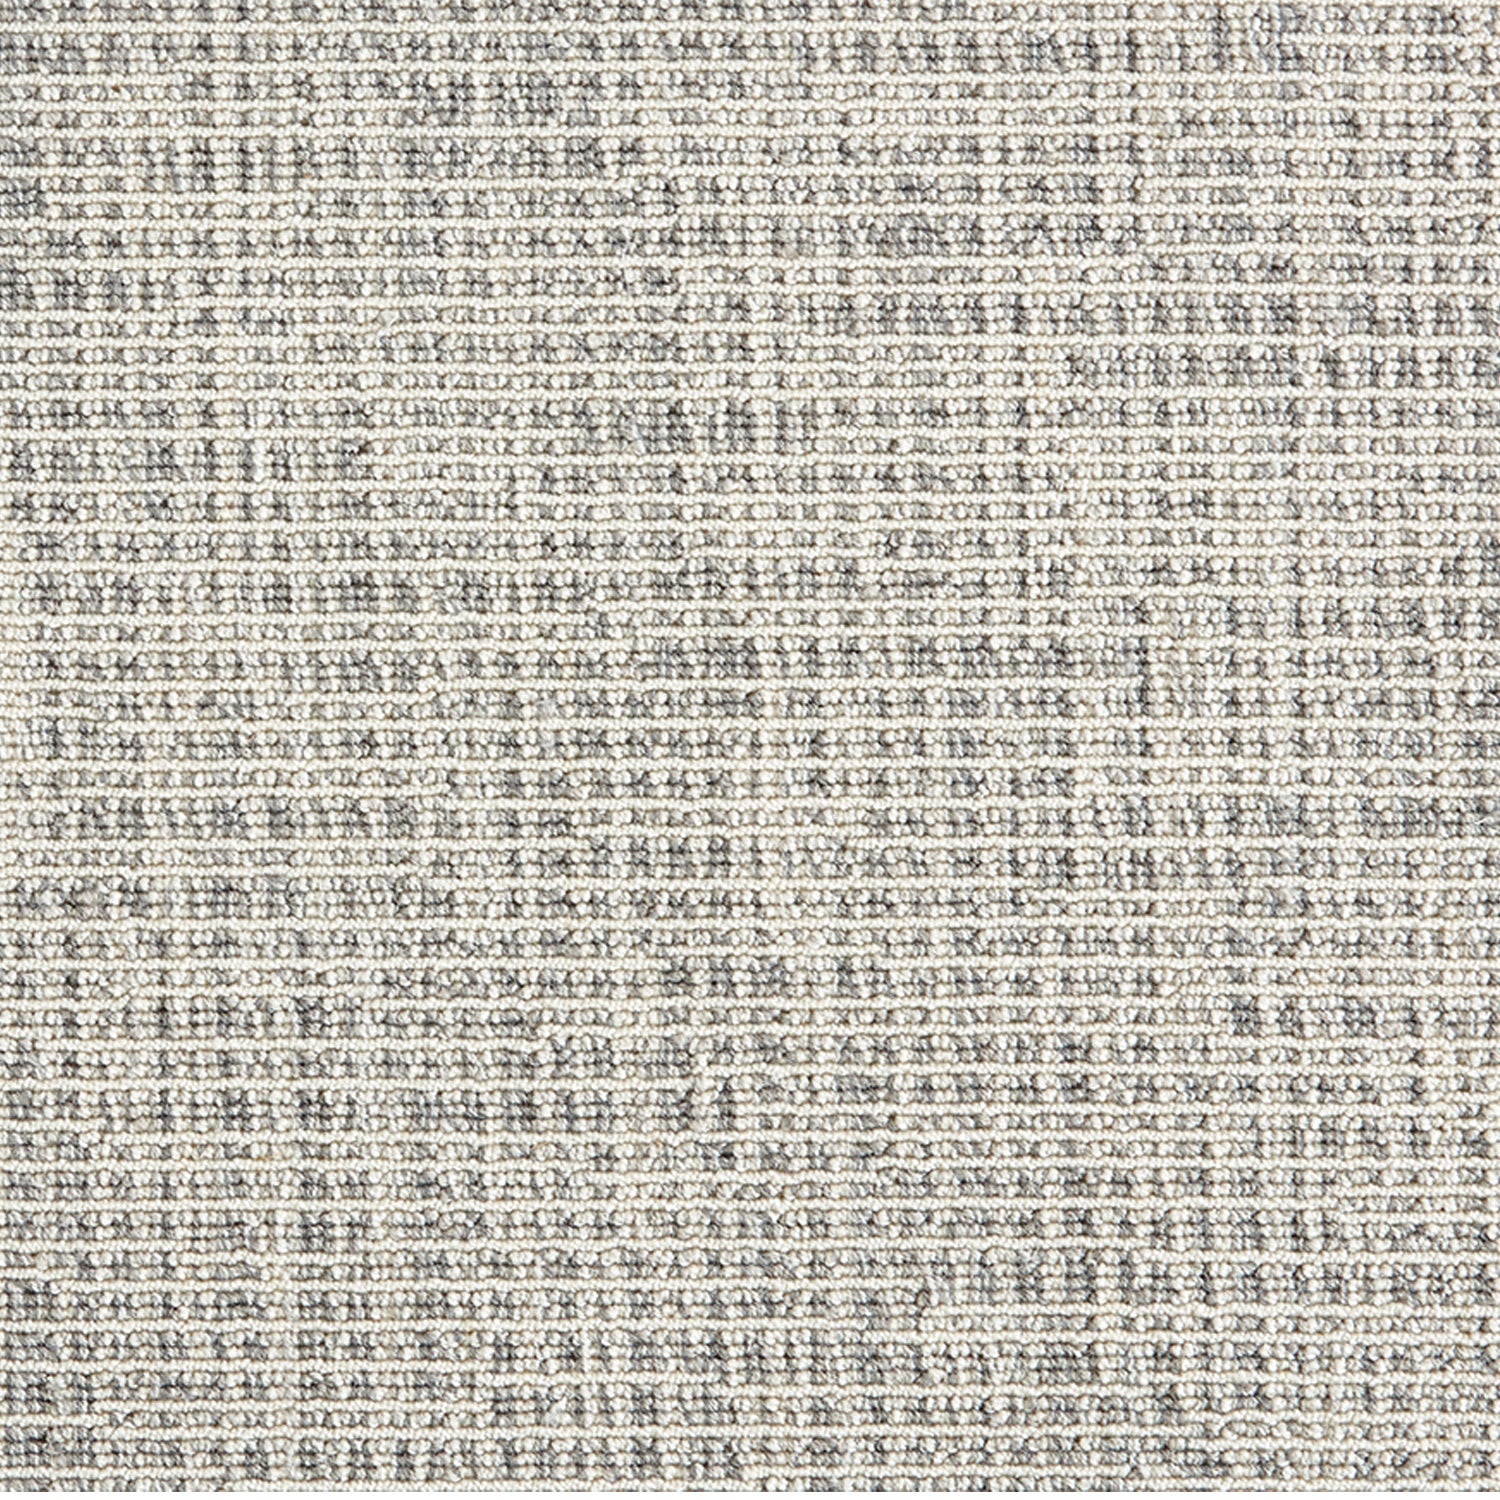 Synthetic blend broadloom carpet swatch in a woven stripe pattern in tan and mottled gray.